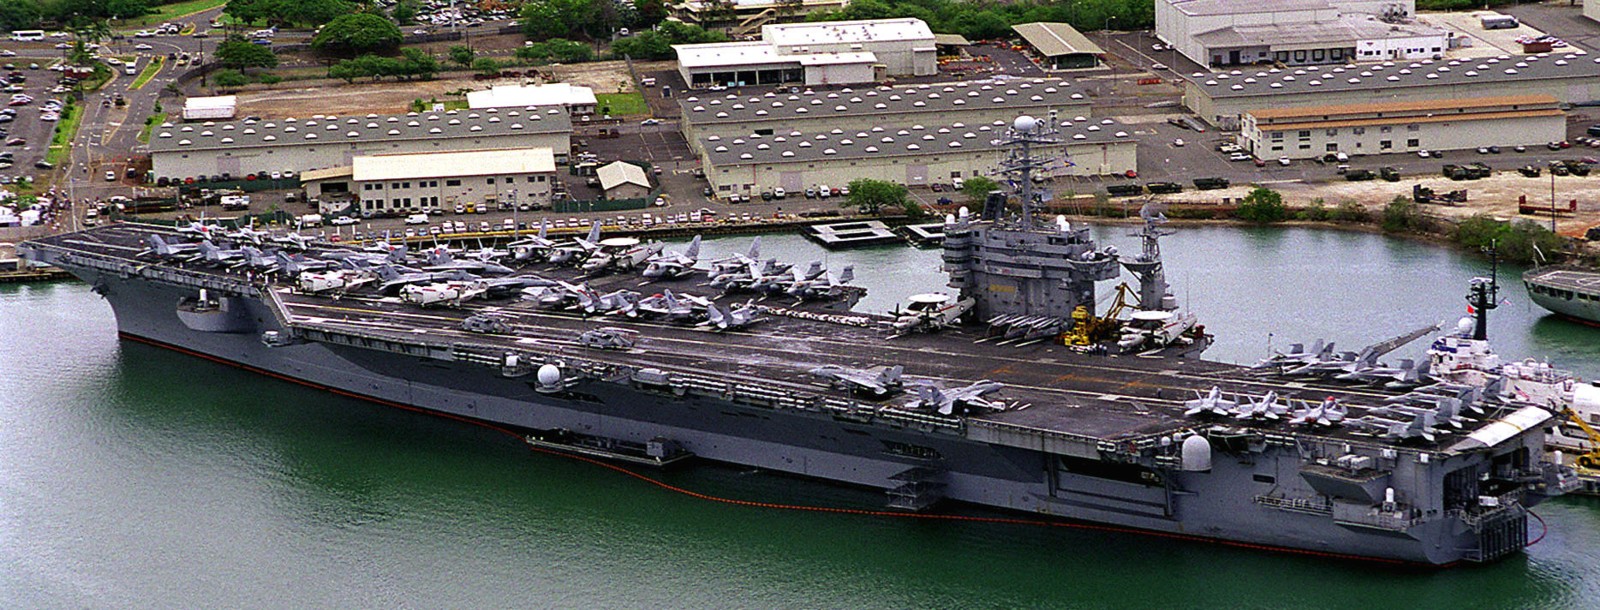 cvn-70 uss carl vinson nimitz class aircraft carrier air wing cvw-11 us navy pearl harbor hawaii 89